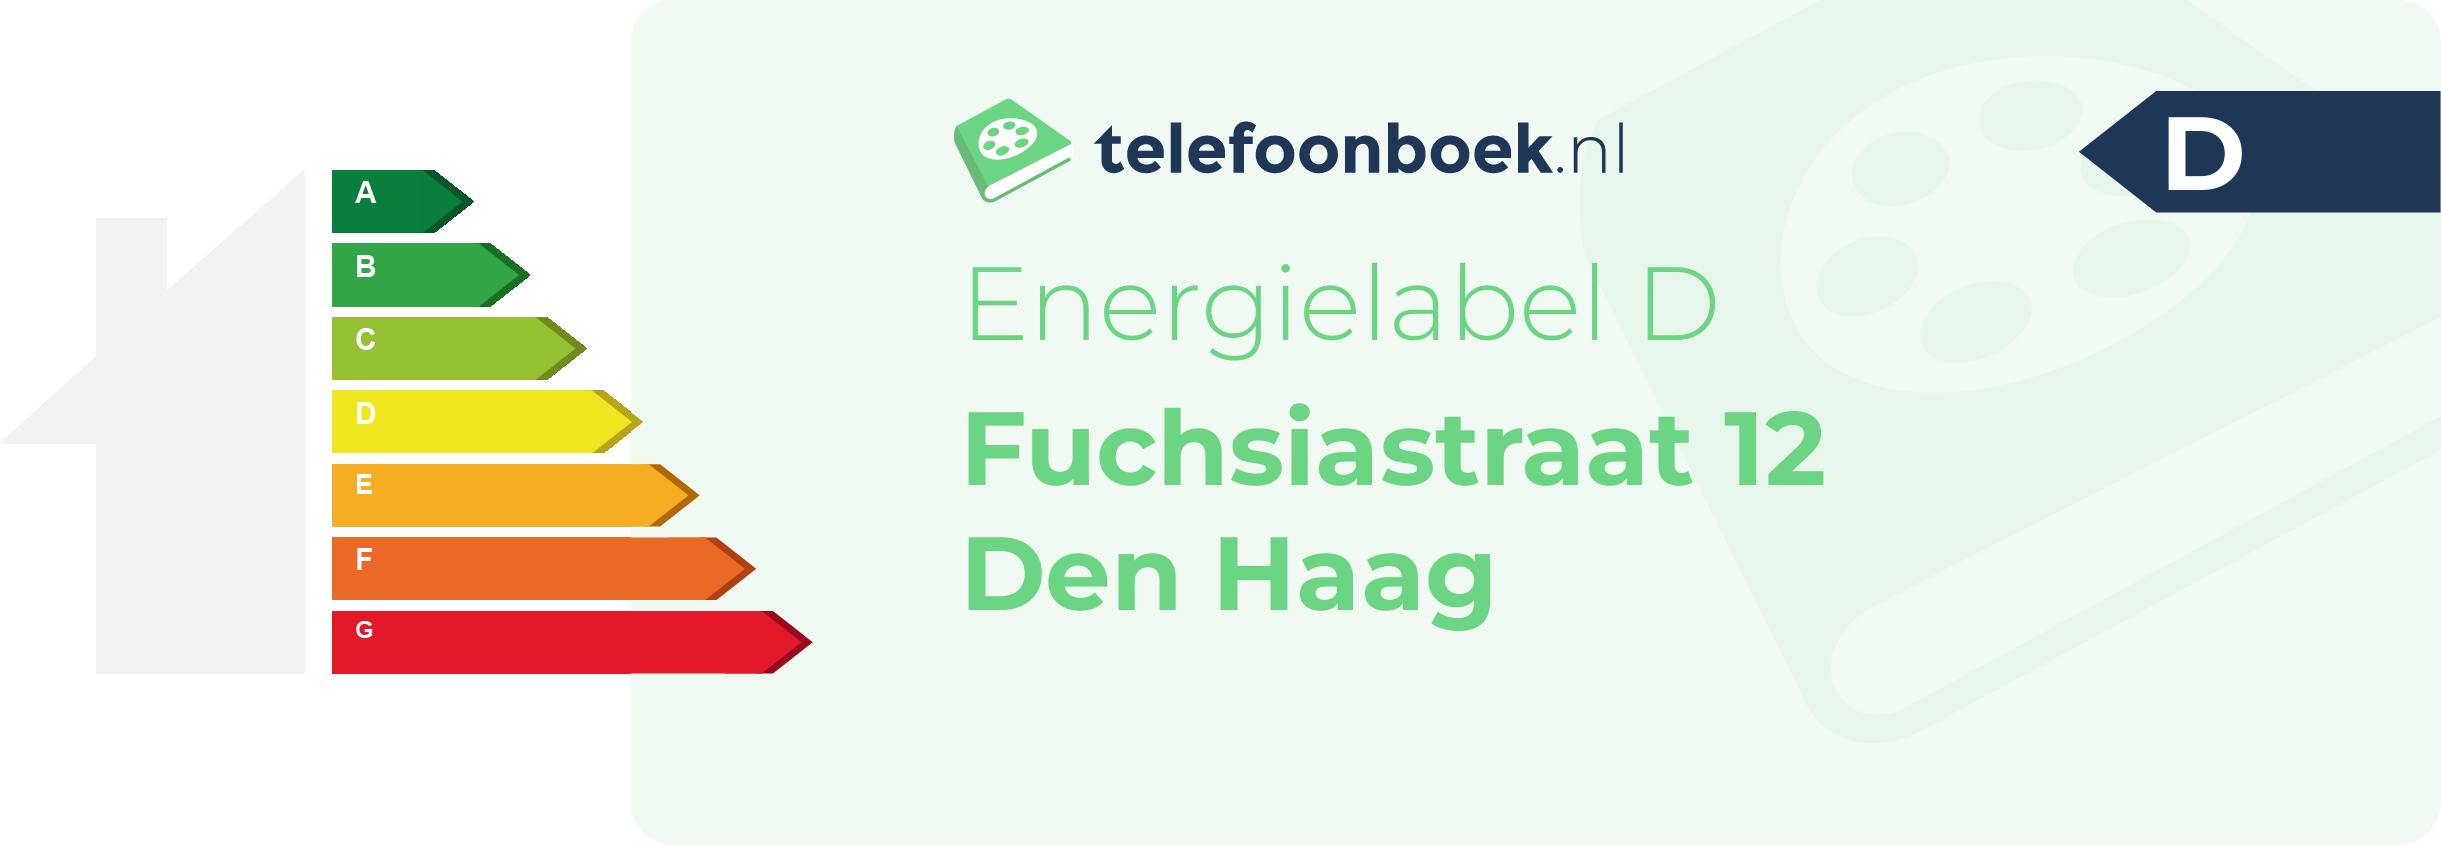 Energielabel Fuchsiastraat 12 Den Haag